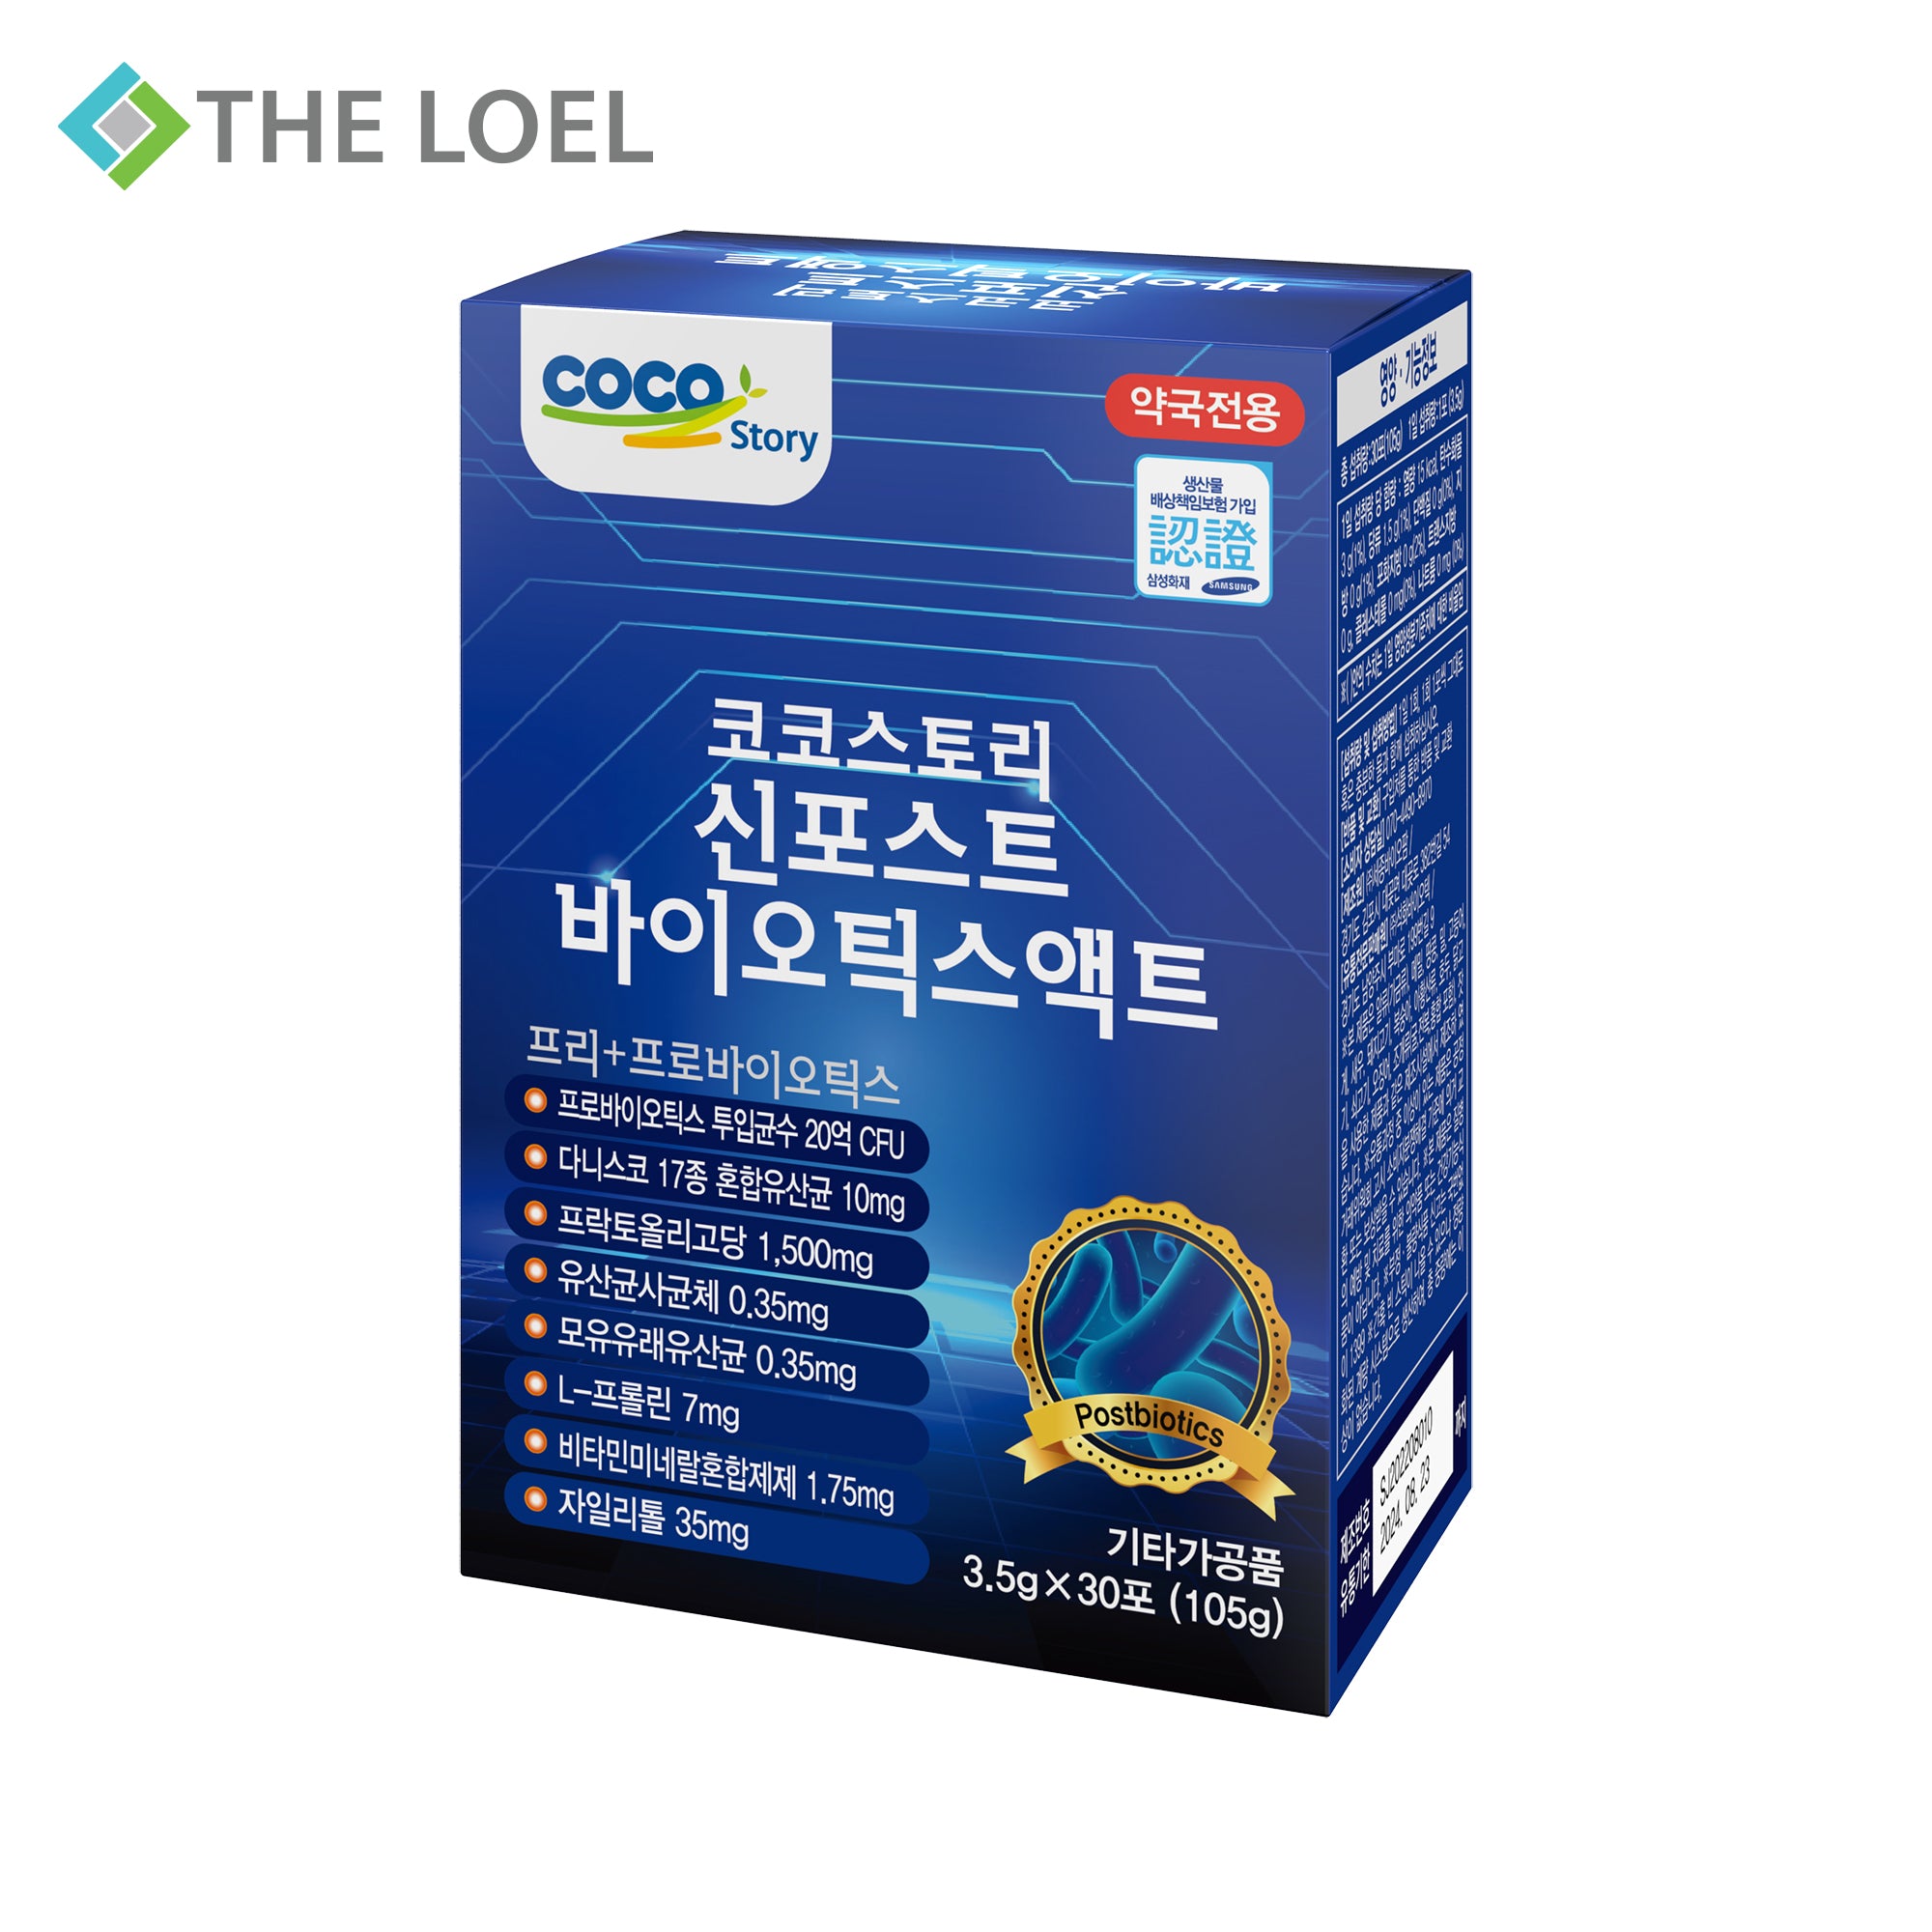 The Loel - 韓國新一代益生菌(增强版) Korea New Generation  Probiotics  (3.5g x 30pc)